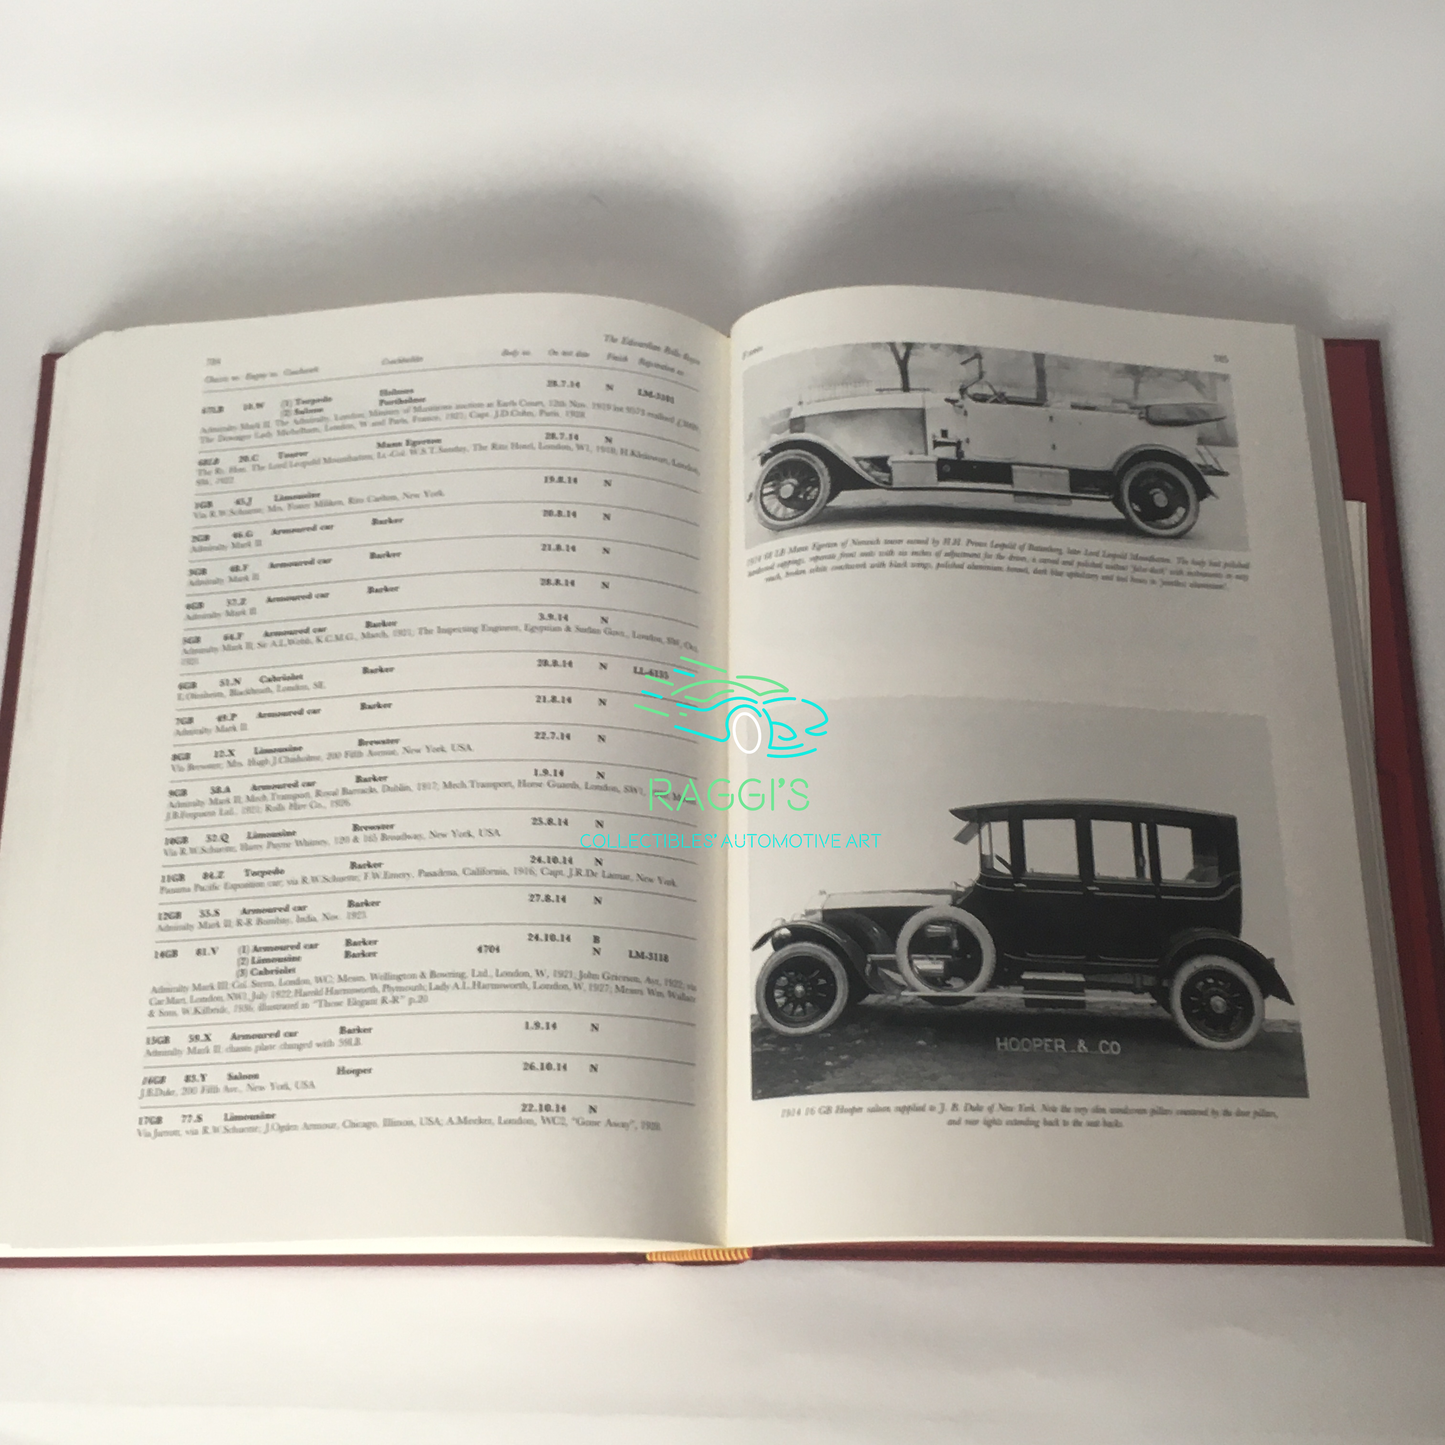 Rolls-Royce, Libro The Edwardian Rolls-Royce di John Fasal e Bryan Goodman, ISBN 0950648957 - Raggi's Collectibles' Automotive Art